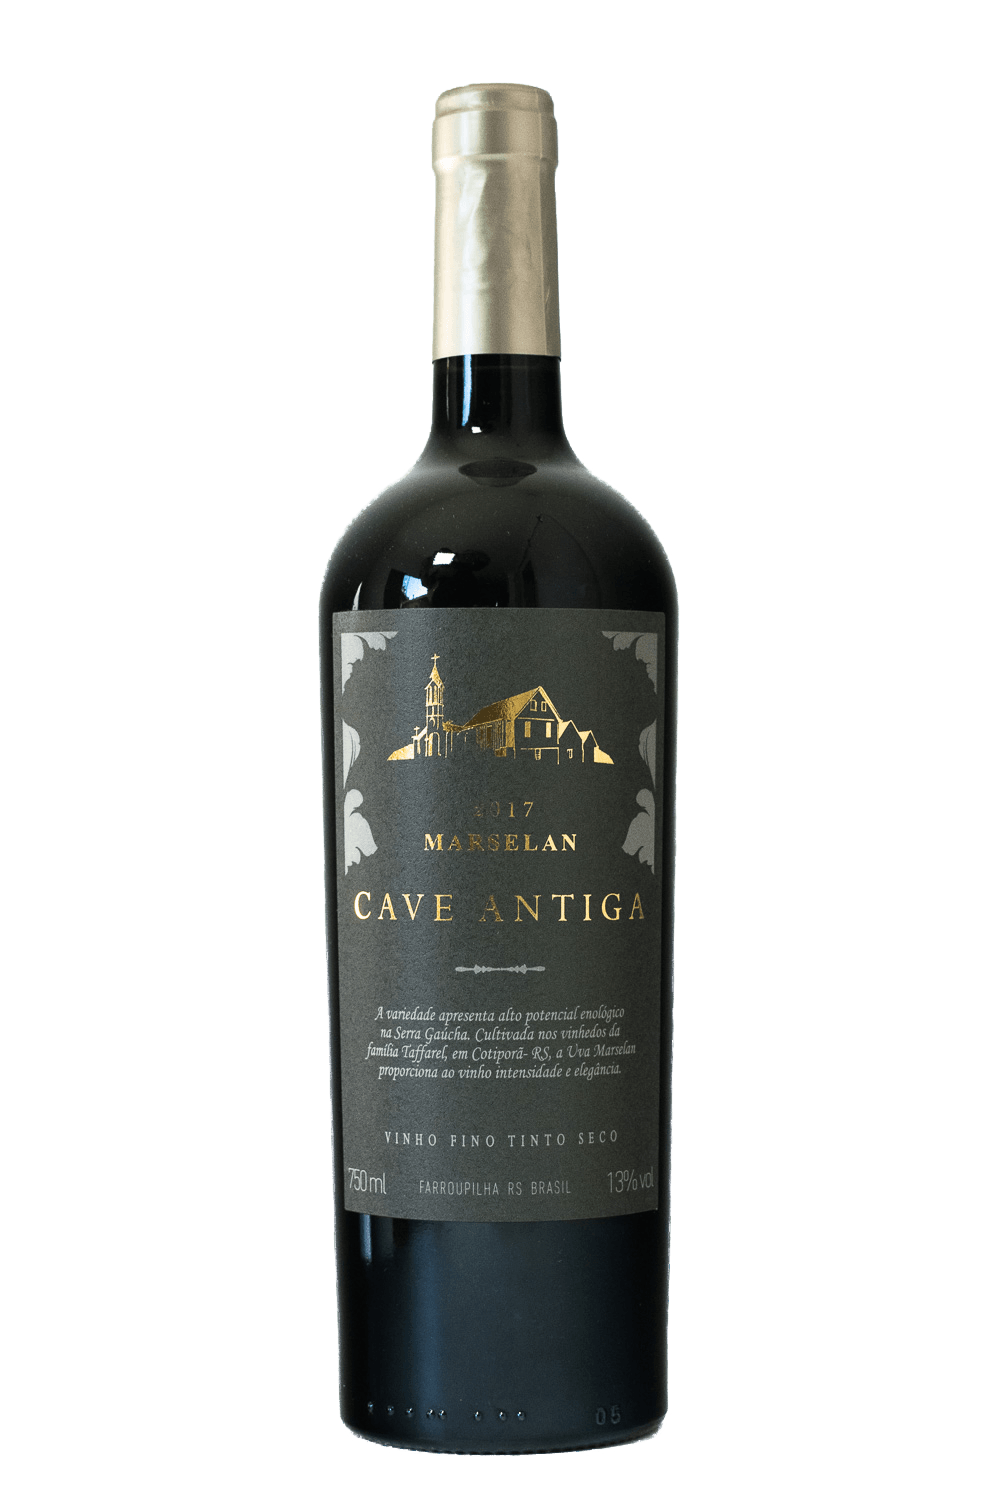 Cave Antiga - Marselan 2017 - The Blend Wines